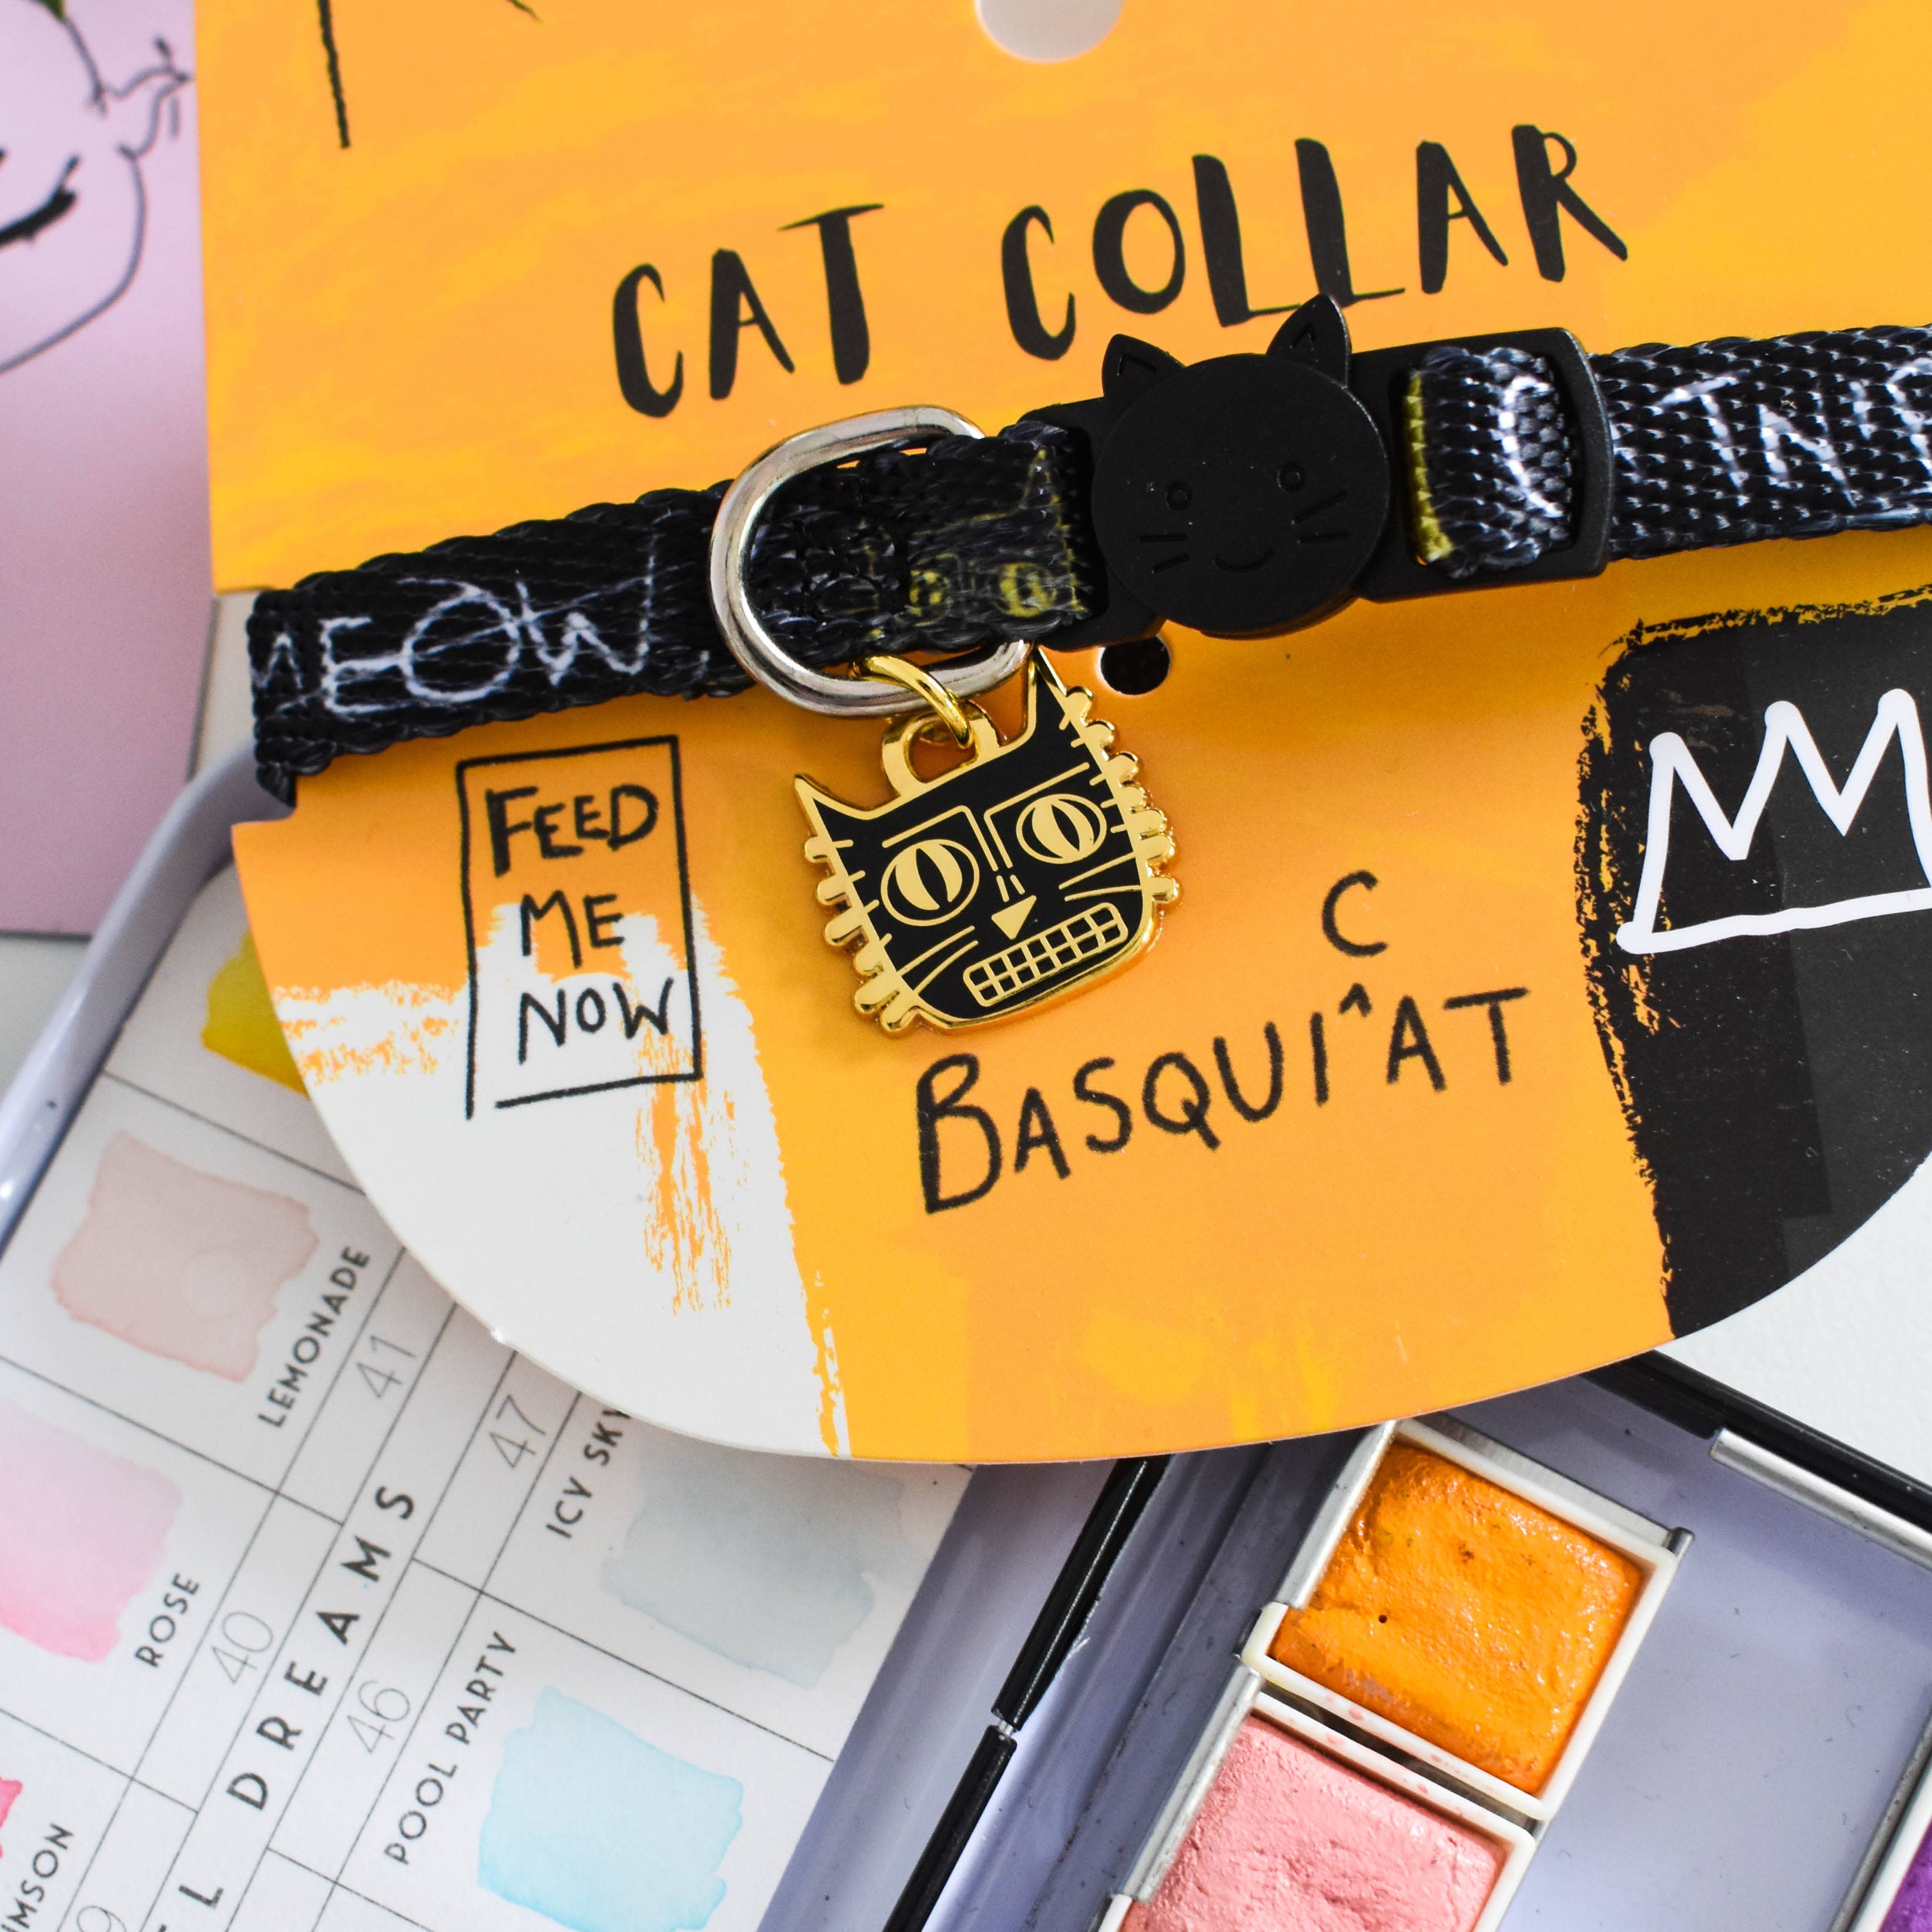 BasquiCAT Artist Cat Collar by Niaski